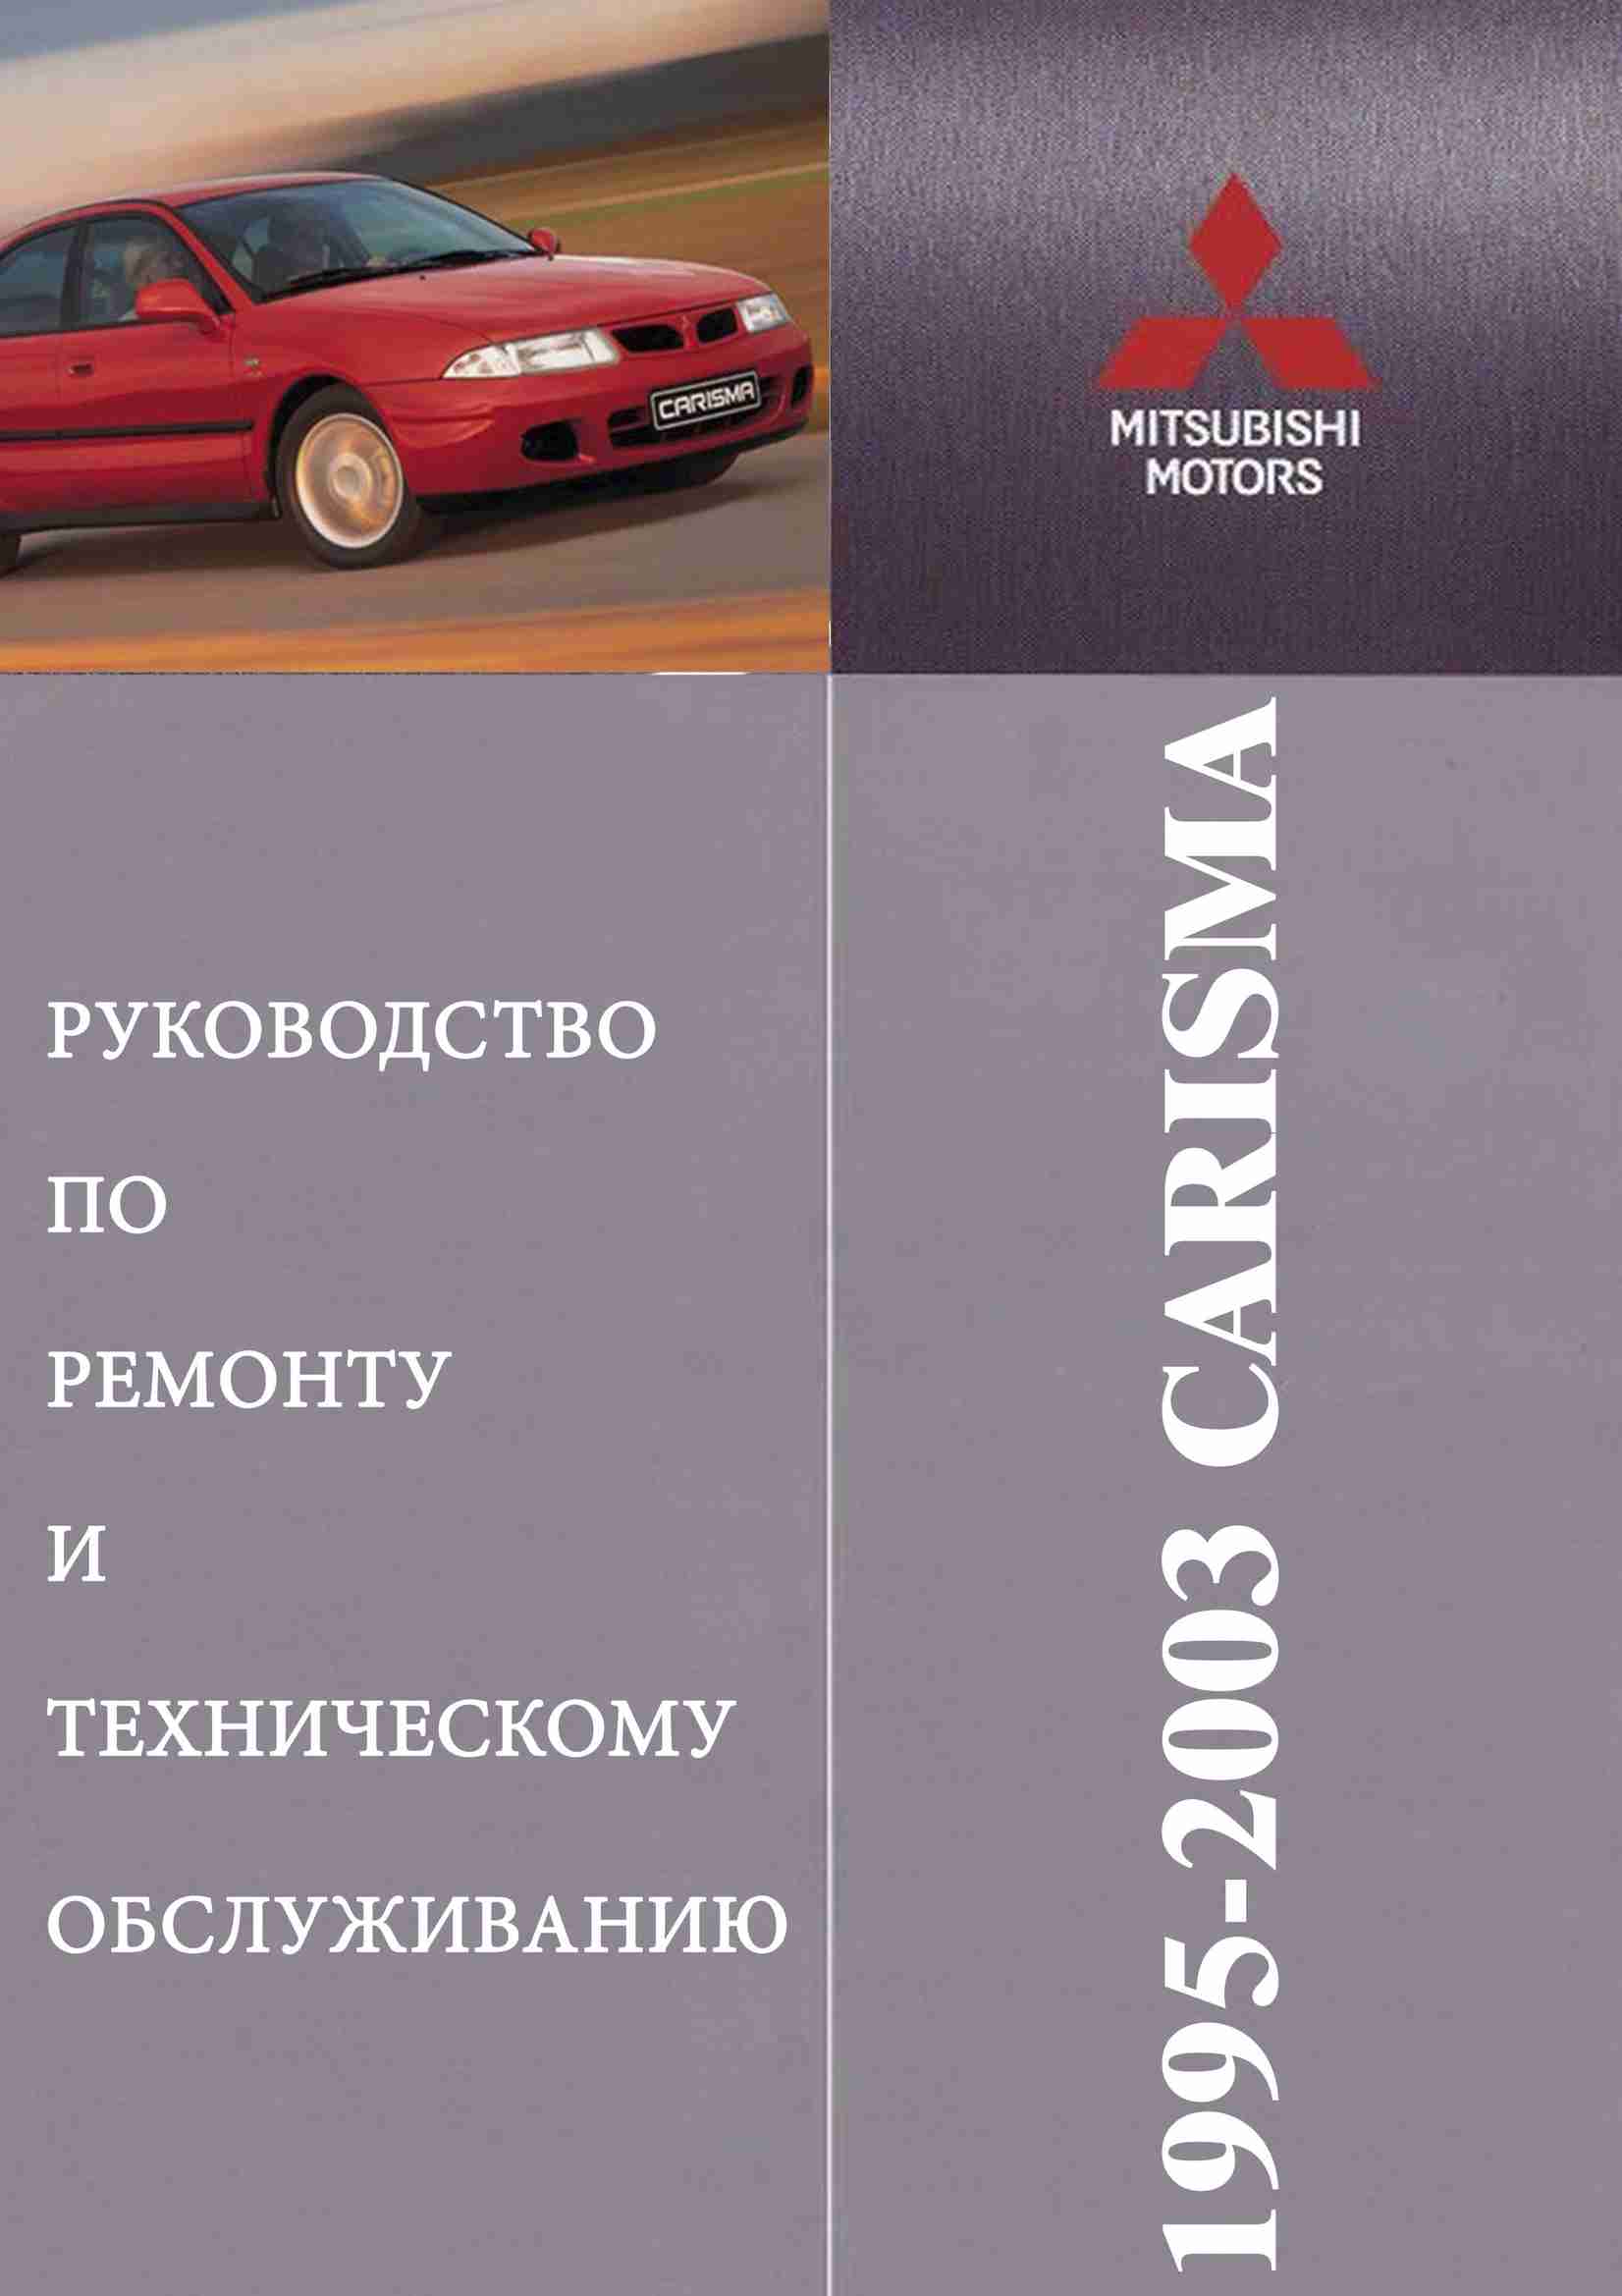 Mitsubishi Carisma 1995-2003 Устройство, техническое обслуживание и ремонт обложка